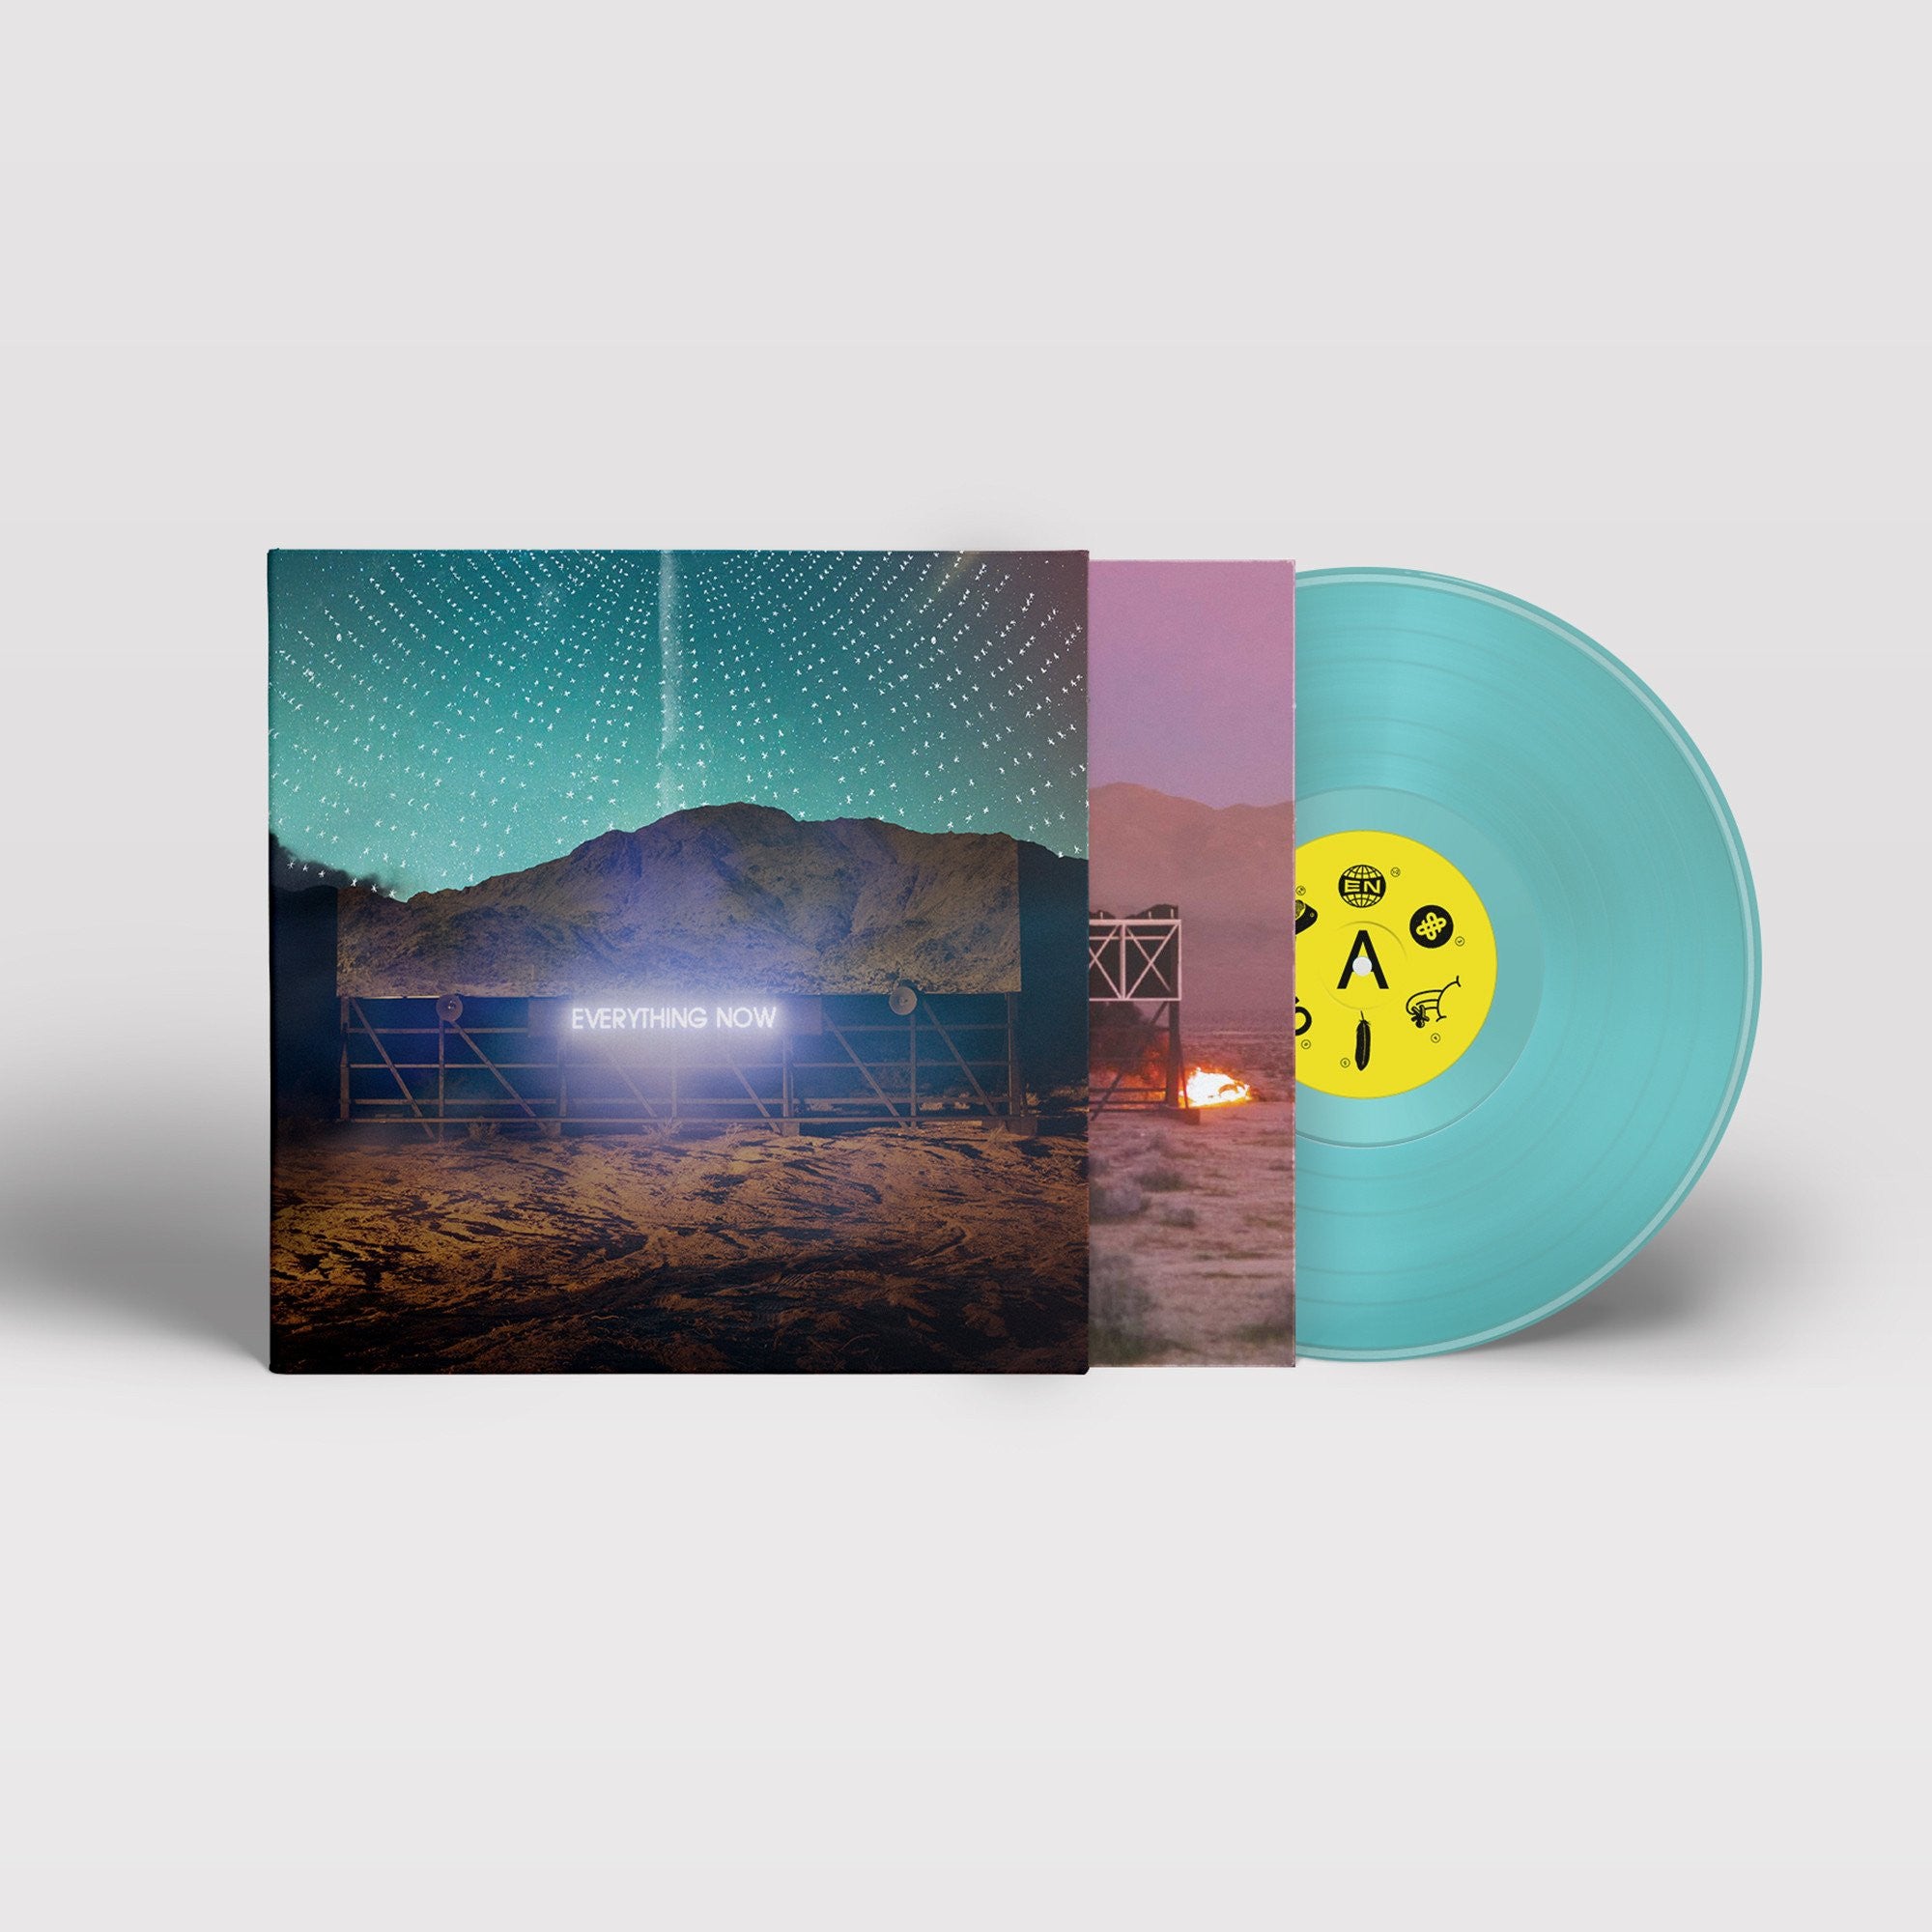 Arcade Fire - Everything Now (Night Version) - New LP Record 2017 Sonovox Blue Translucent Vinyl - Indie Rock